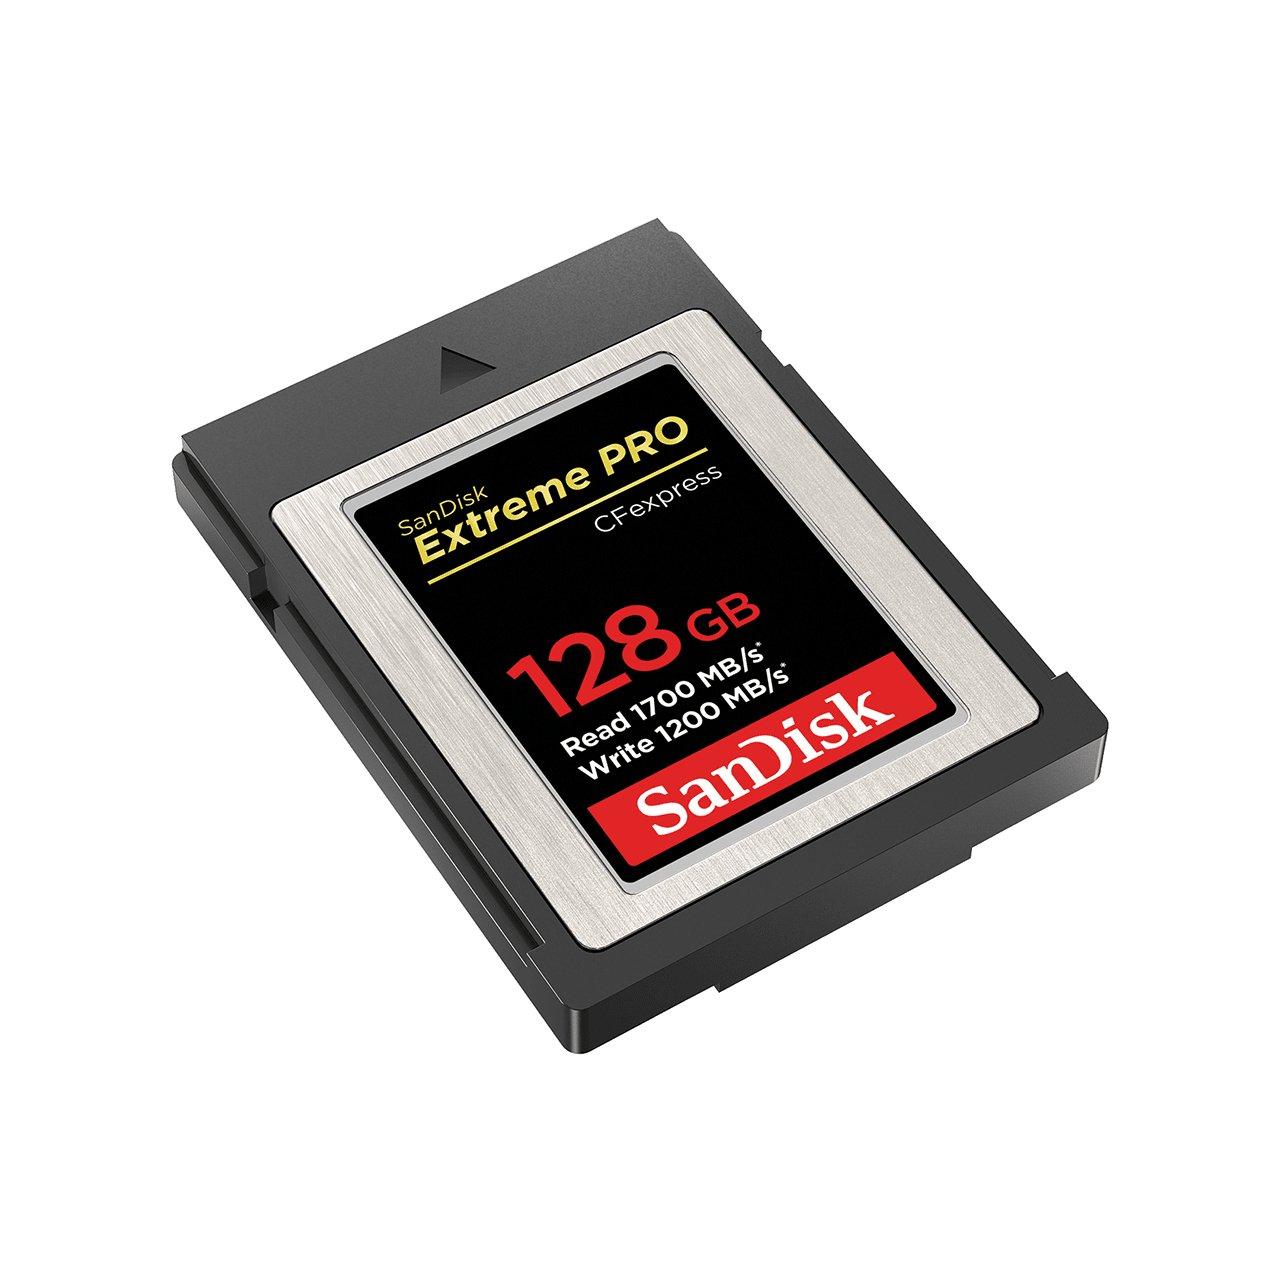 SanDisk  SanDisk SDCFE-128G-GN4NN memoria flash 128 GB CFexpress 